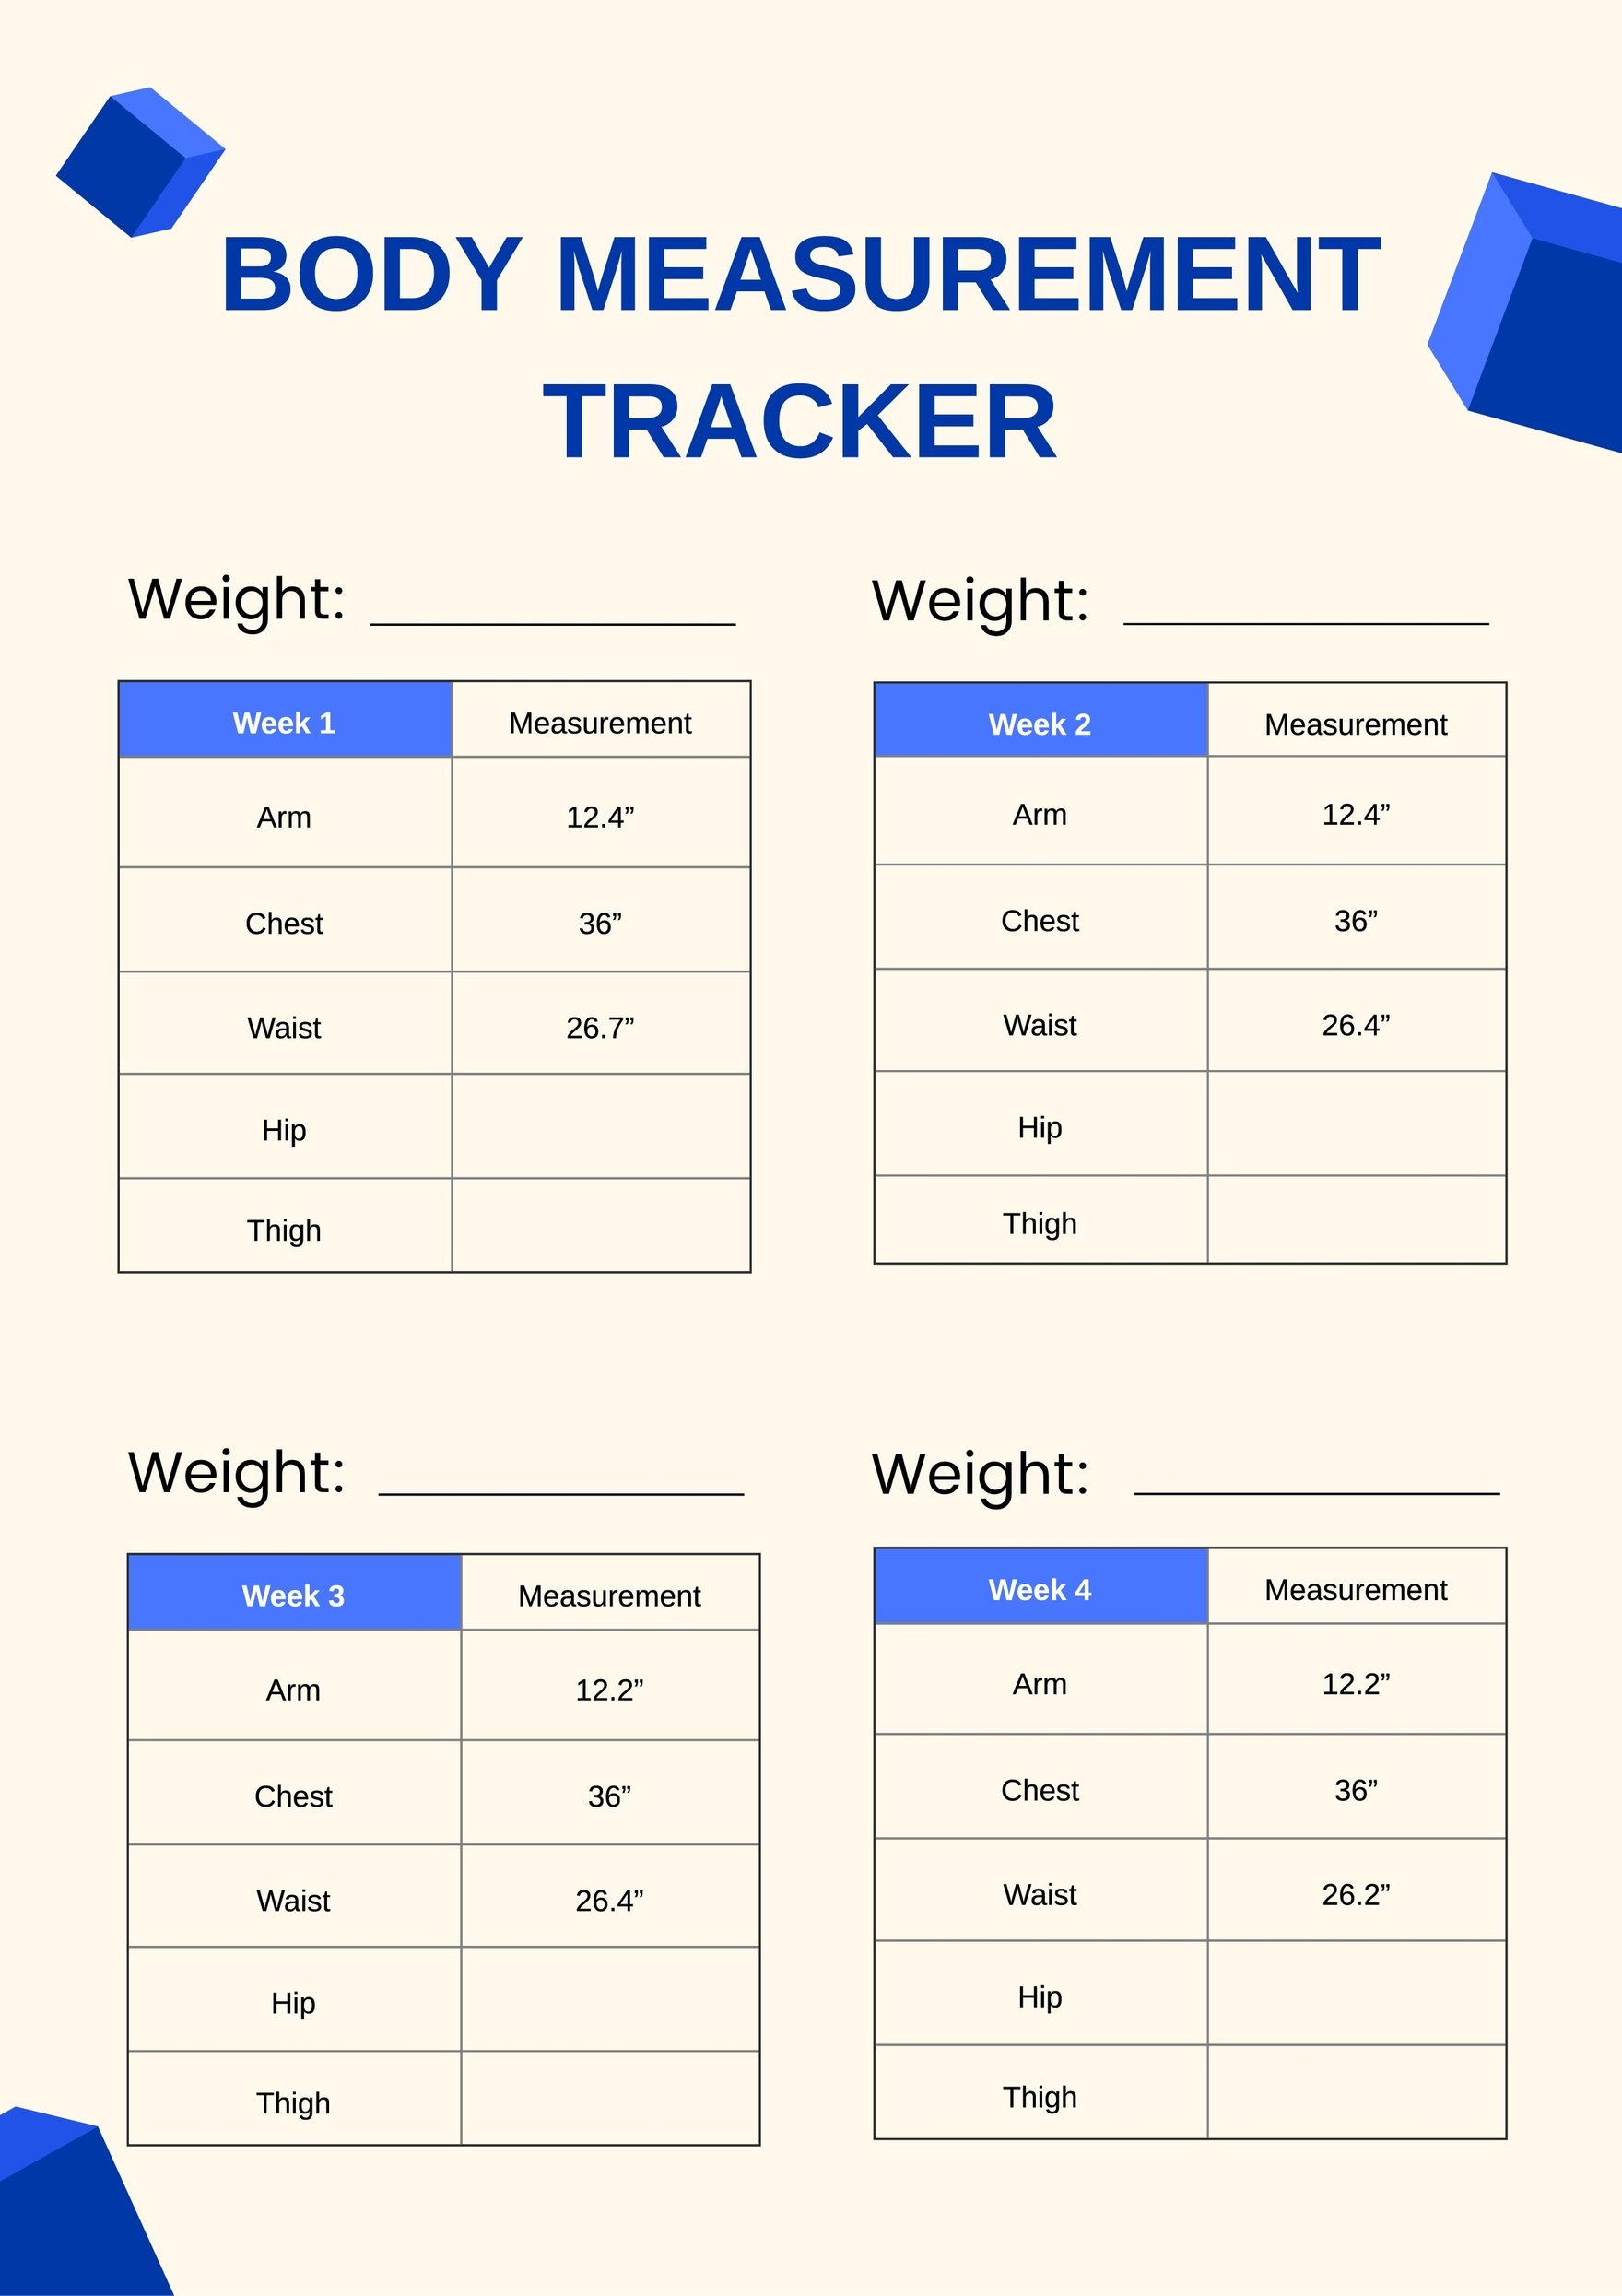 Body Measurement Tracker BMI Chart in PDF, Illustrator